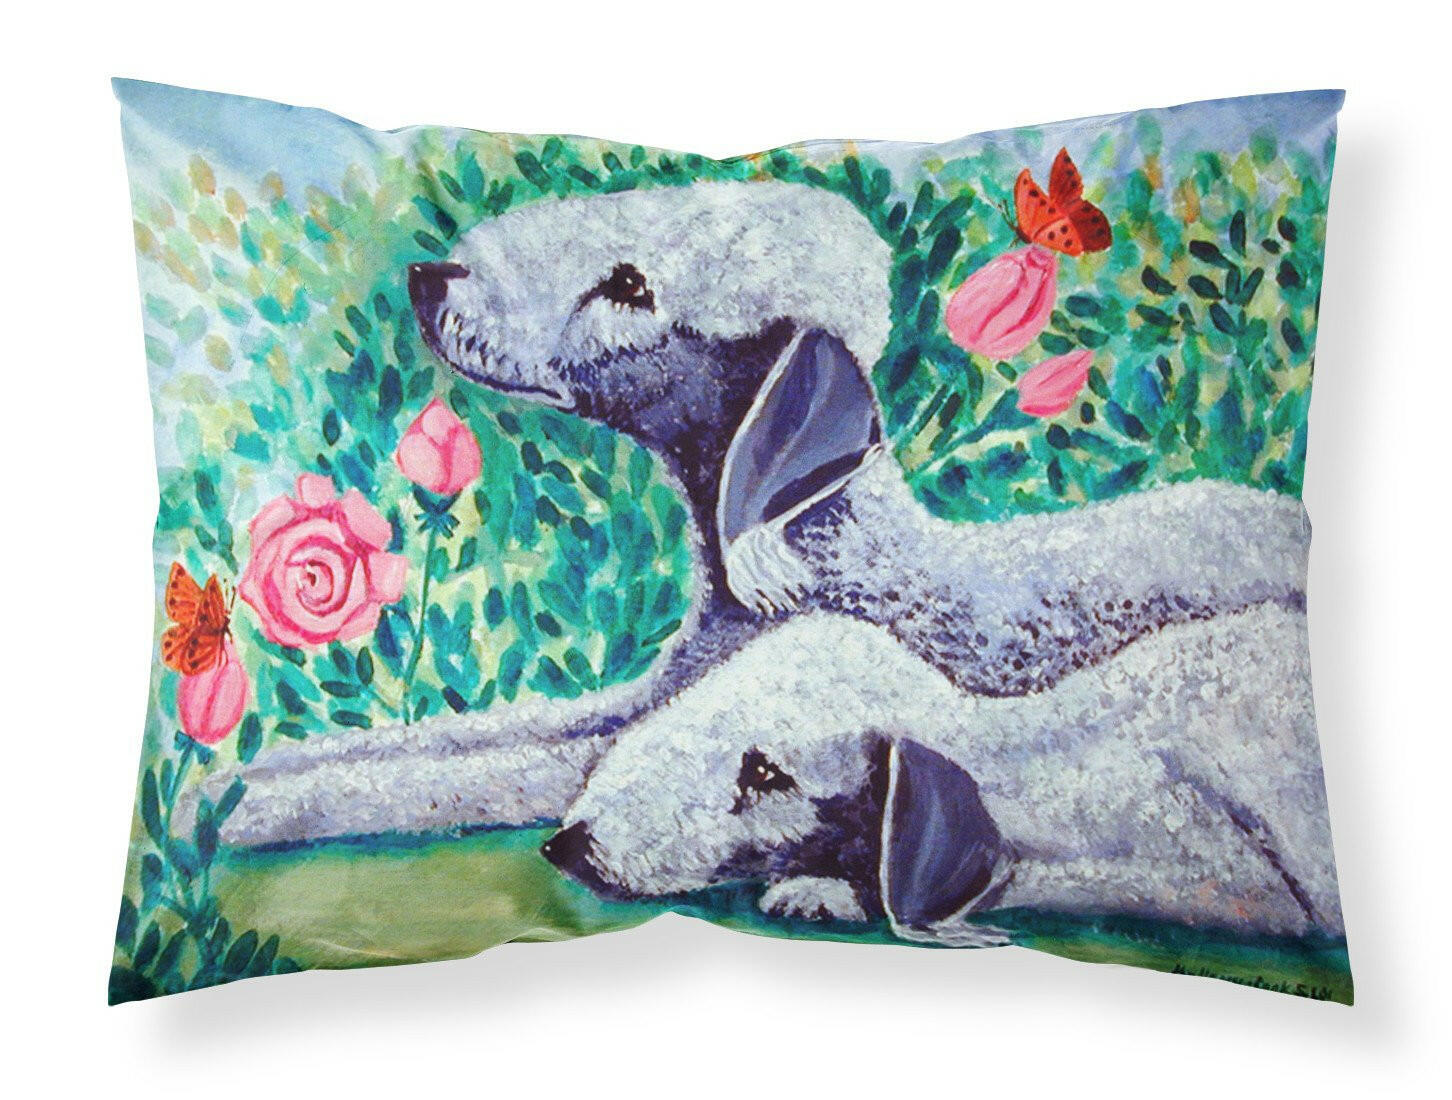 Bedlington Terrier Moisture wicking Fabric standard pillowcase by Caroline's Treasures